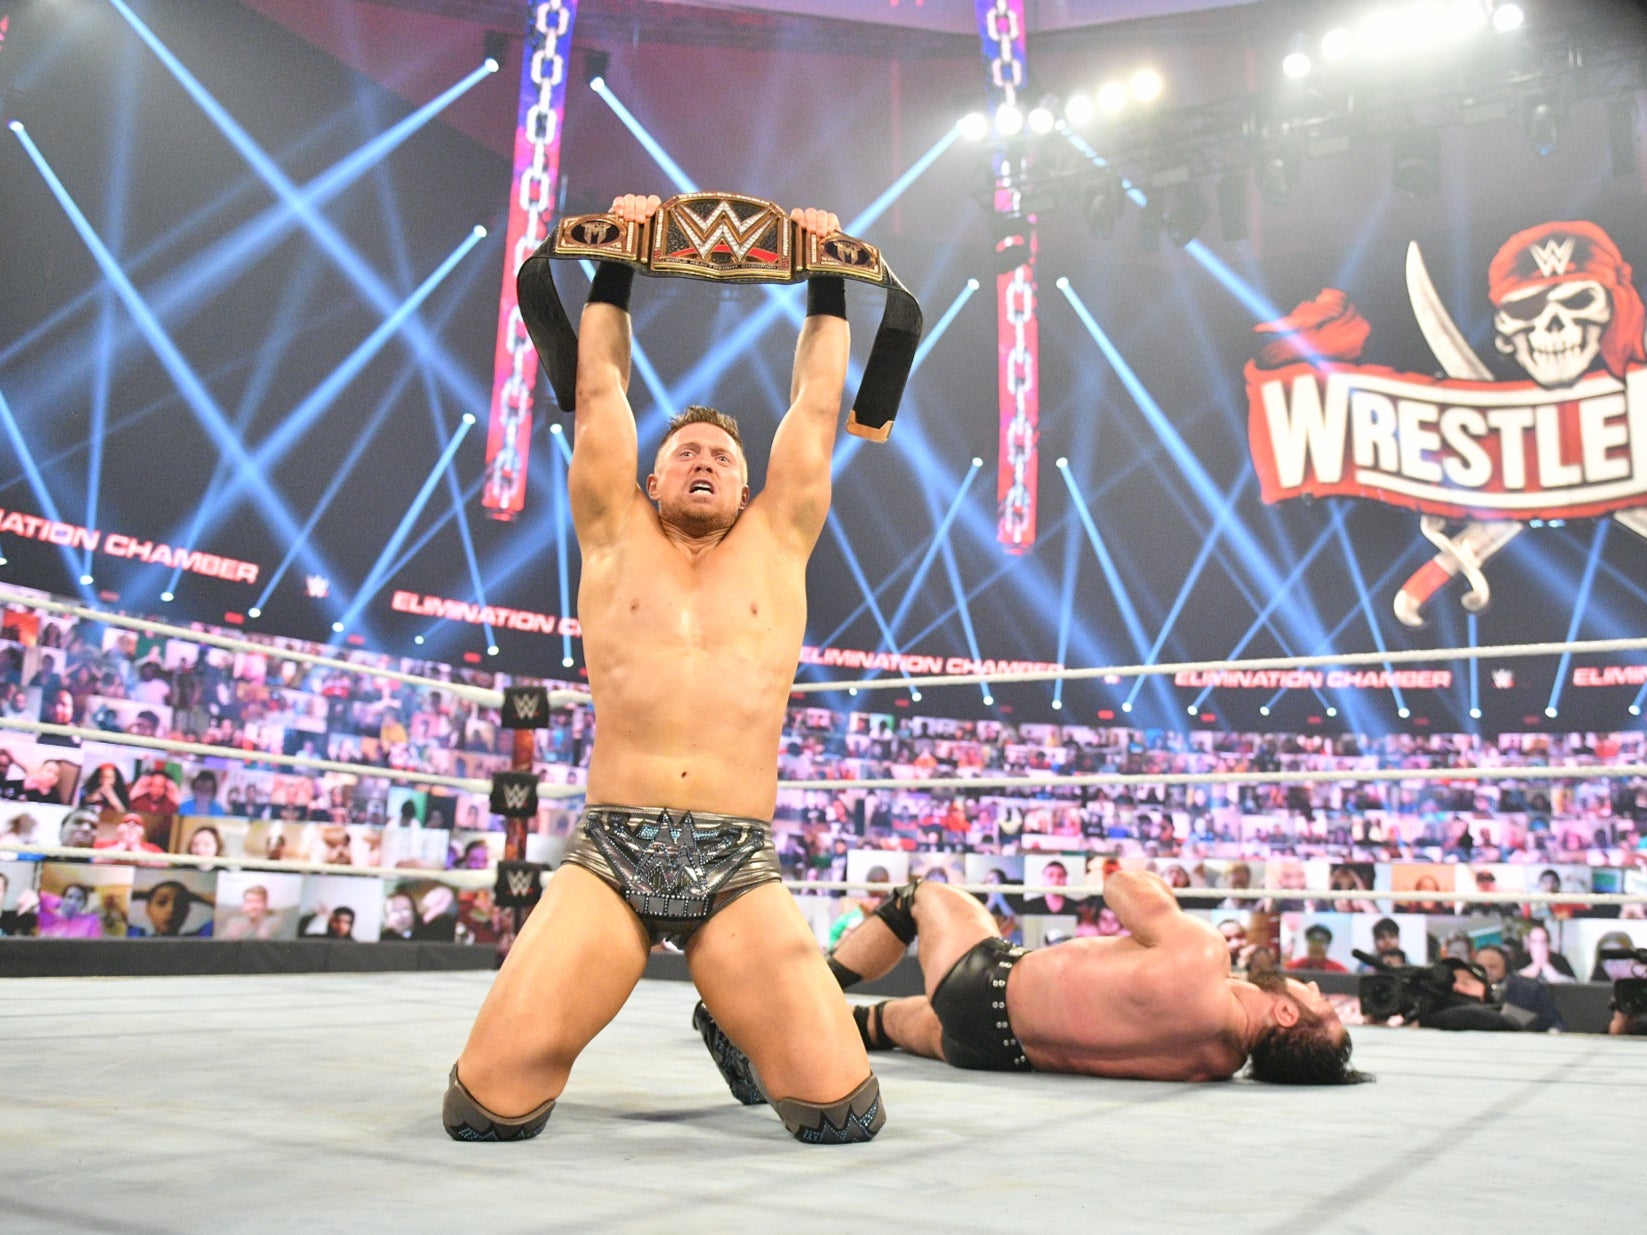 The Miz wins the WWE Championship